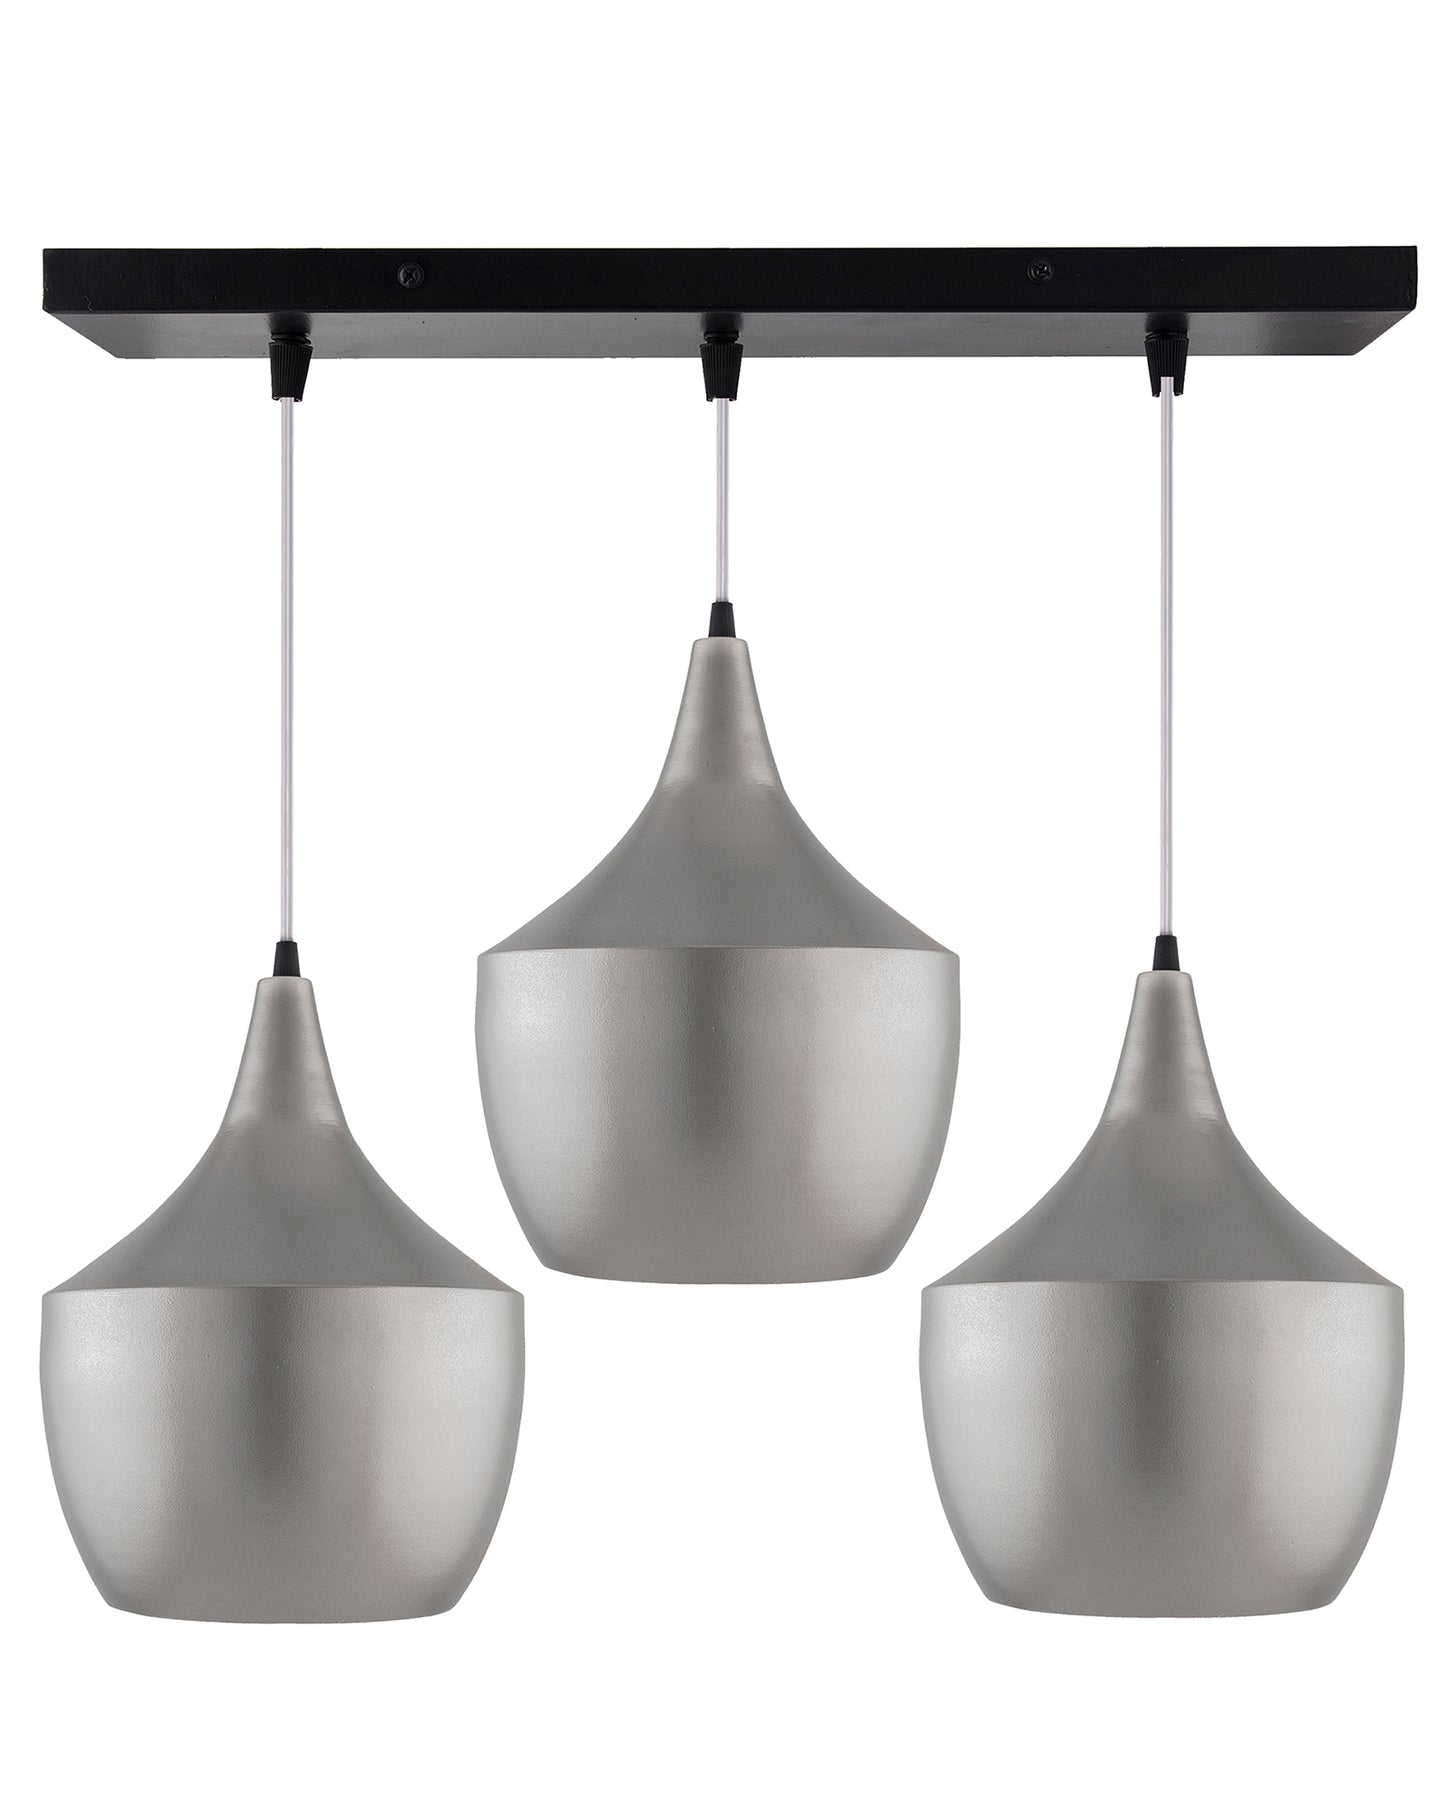 3-Lights Linear Cluster Chandelier Modern Pear hanging Light, E27 Holder, Decorative,URBAN Retro, Nordic Style